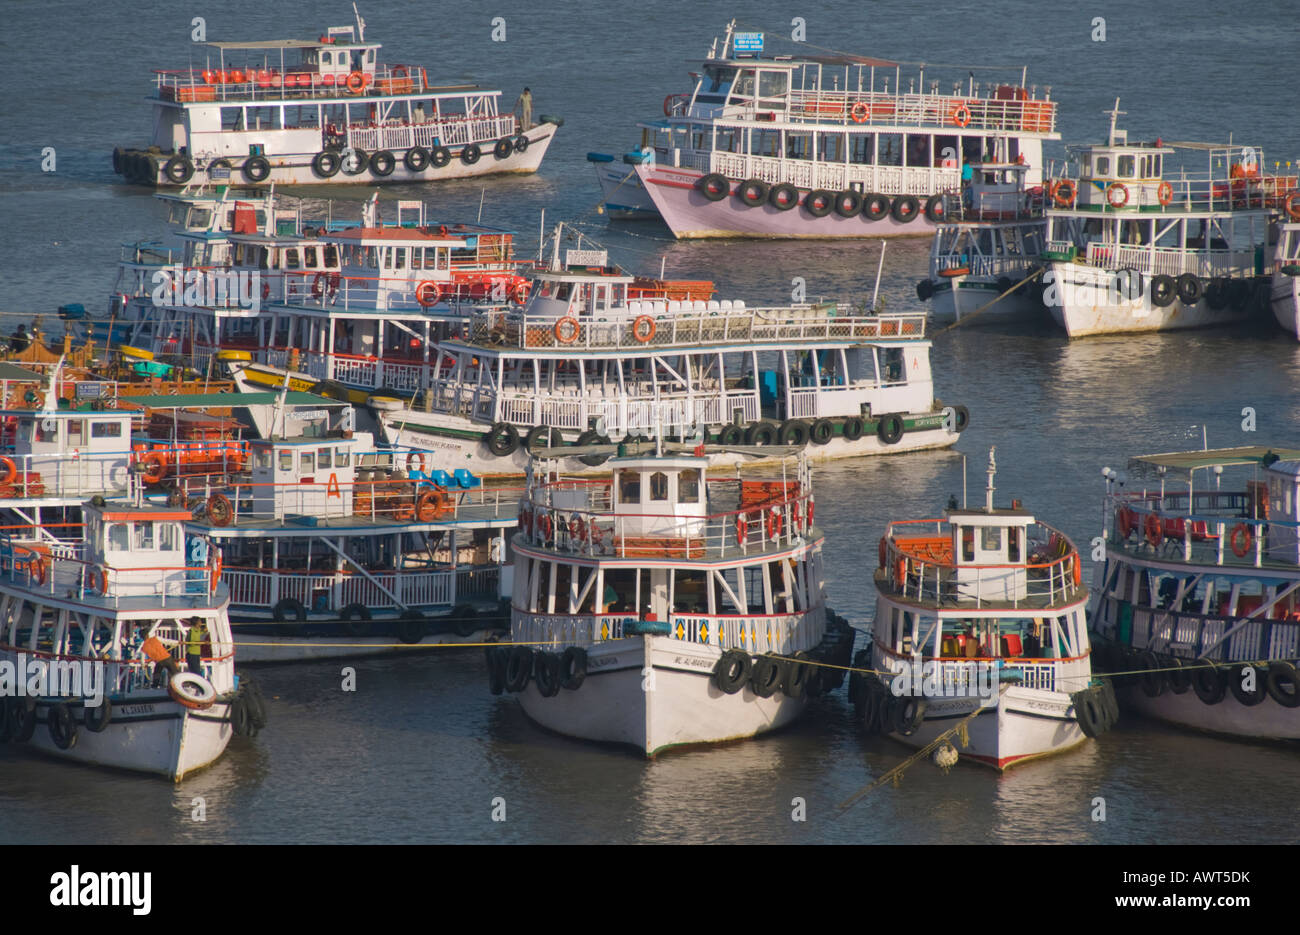 Ferry boats tied up in the harbor off the coast of Mumbai, India Stock Photo